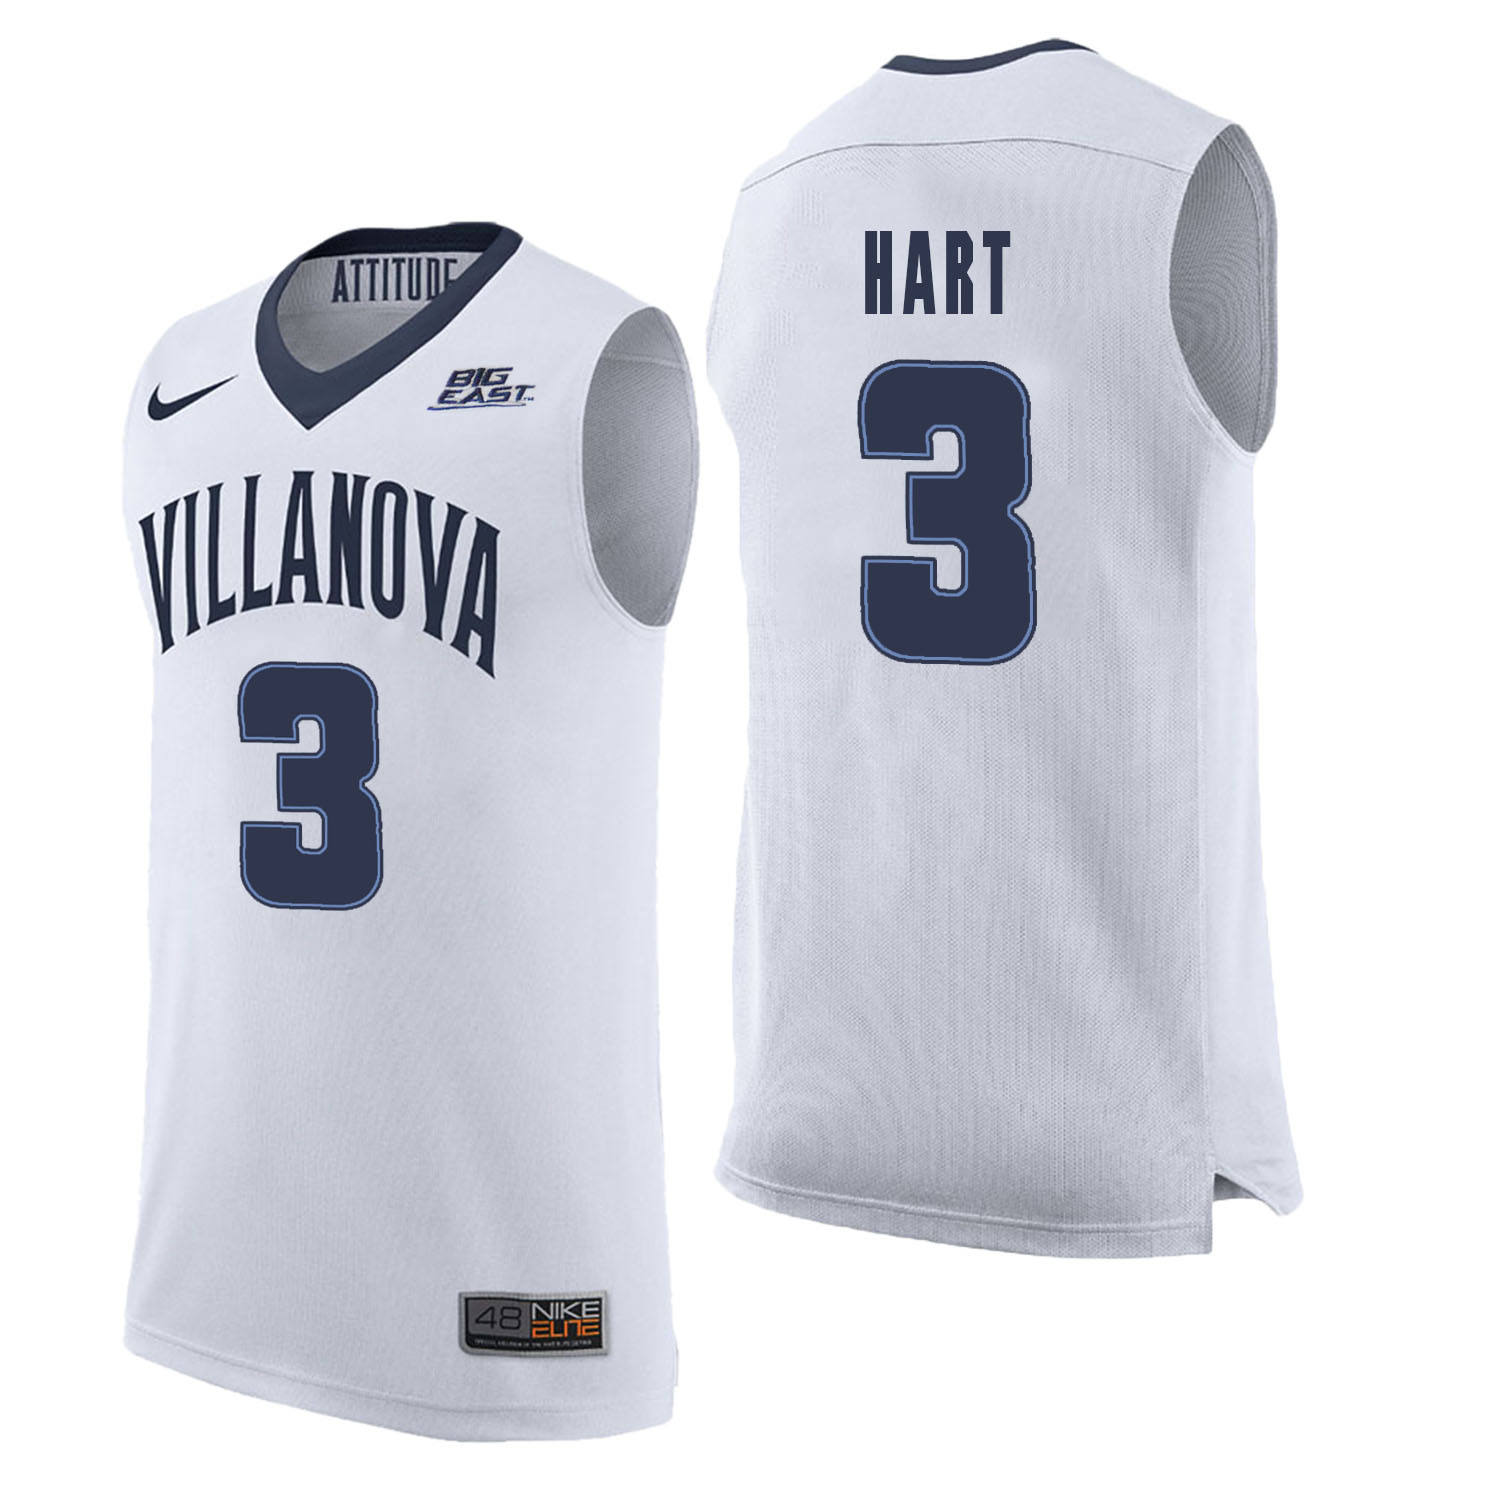 Villanova Wildcats 3 Josh Hart White College Basketball Elite Jersey